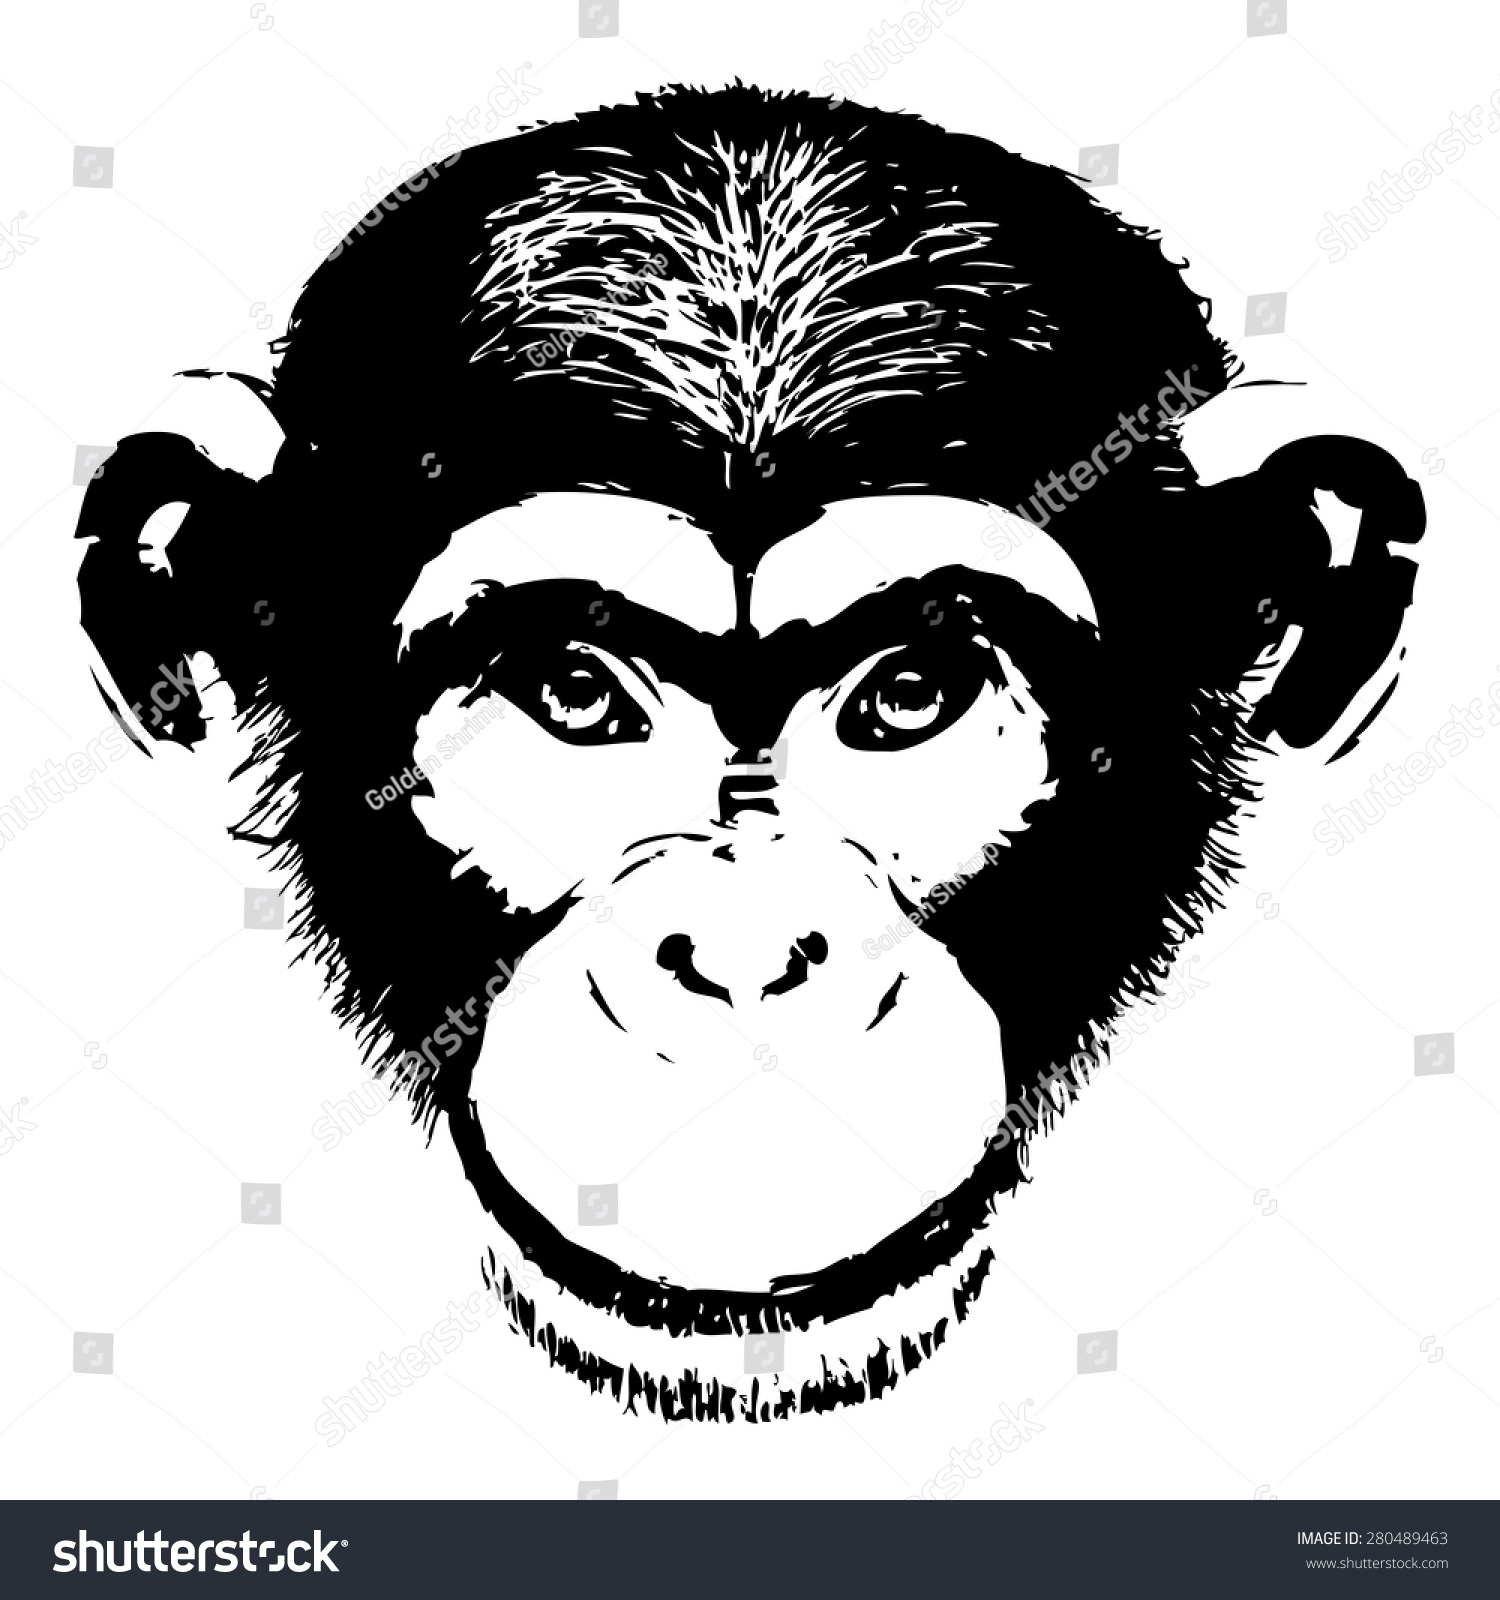 monkey head clip art - photo #32